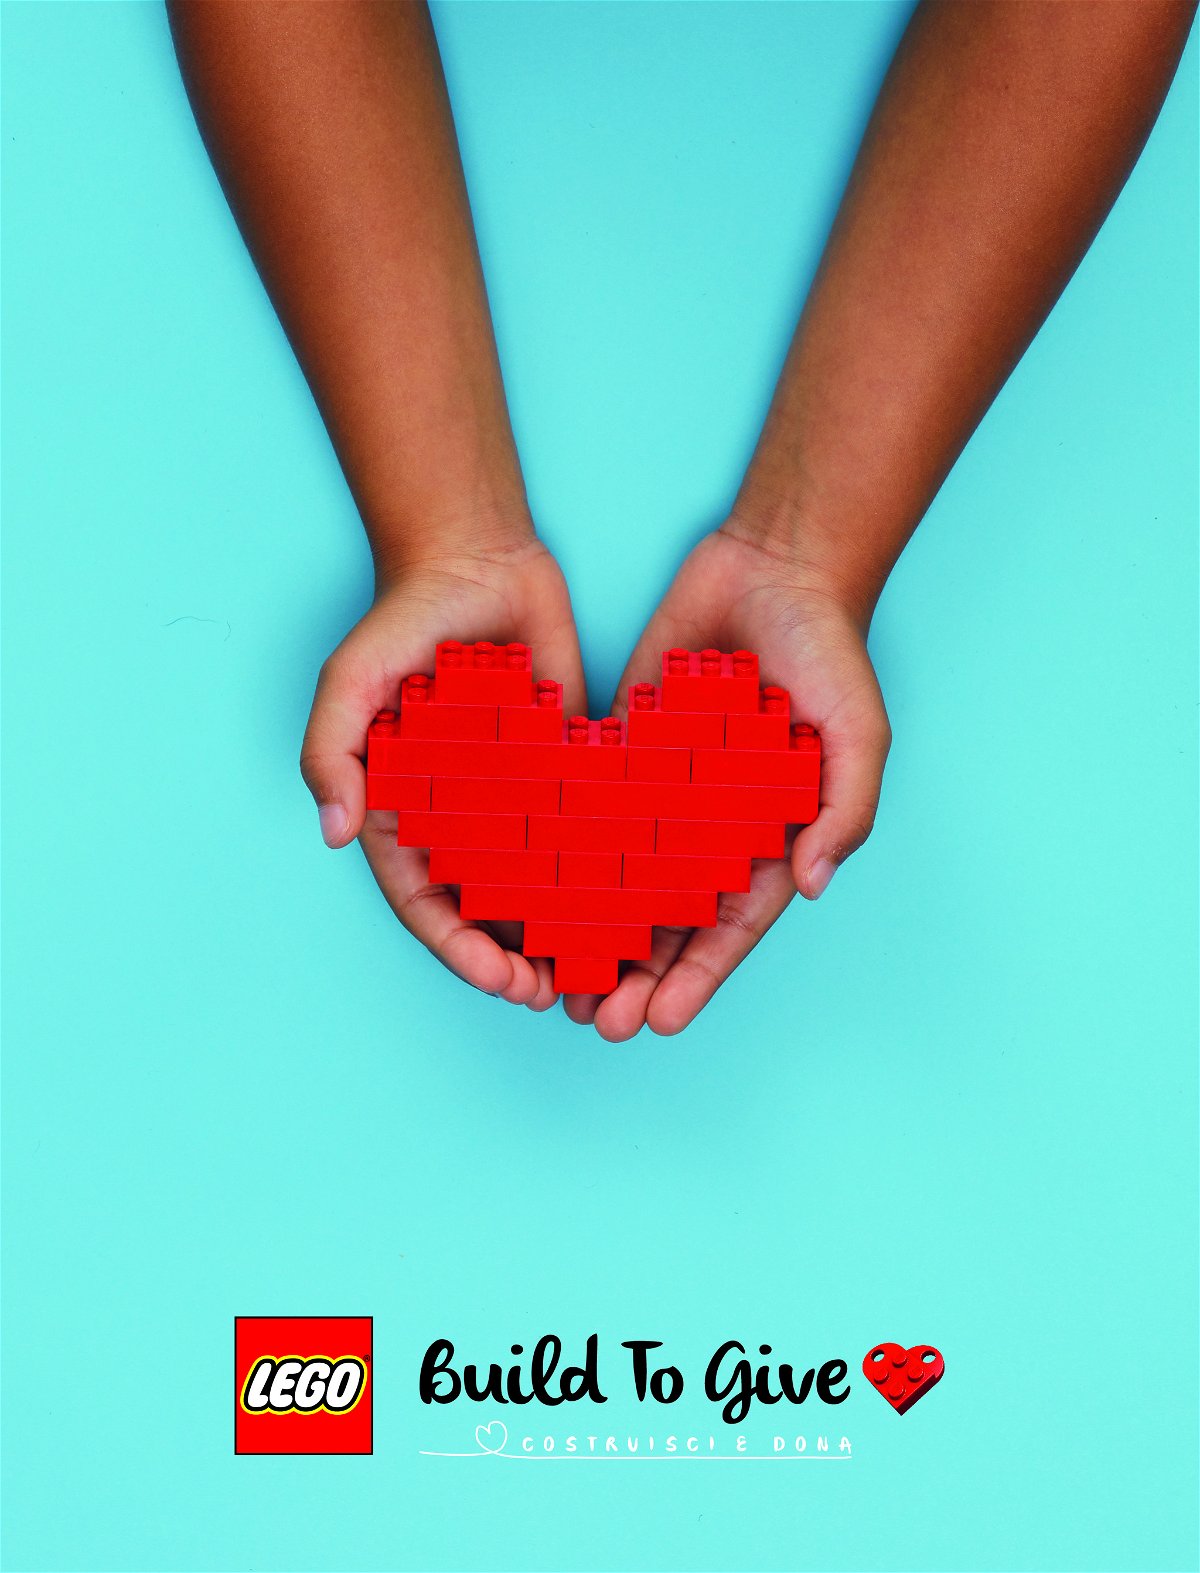 Build to Give - Costruisci e Dona punta a regalare 10.000 set LEGO ai bambini in ospedale